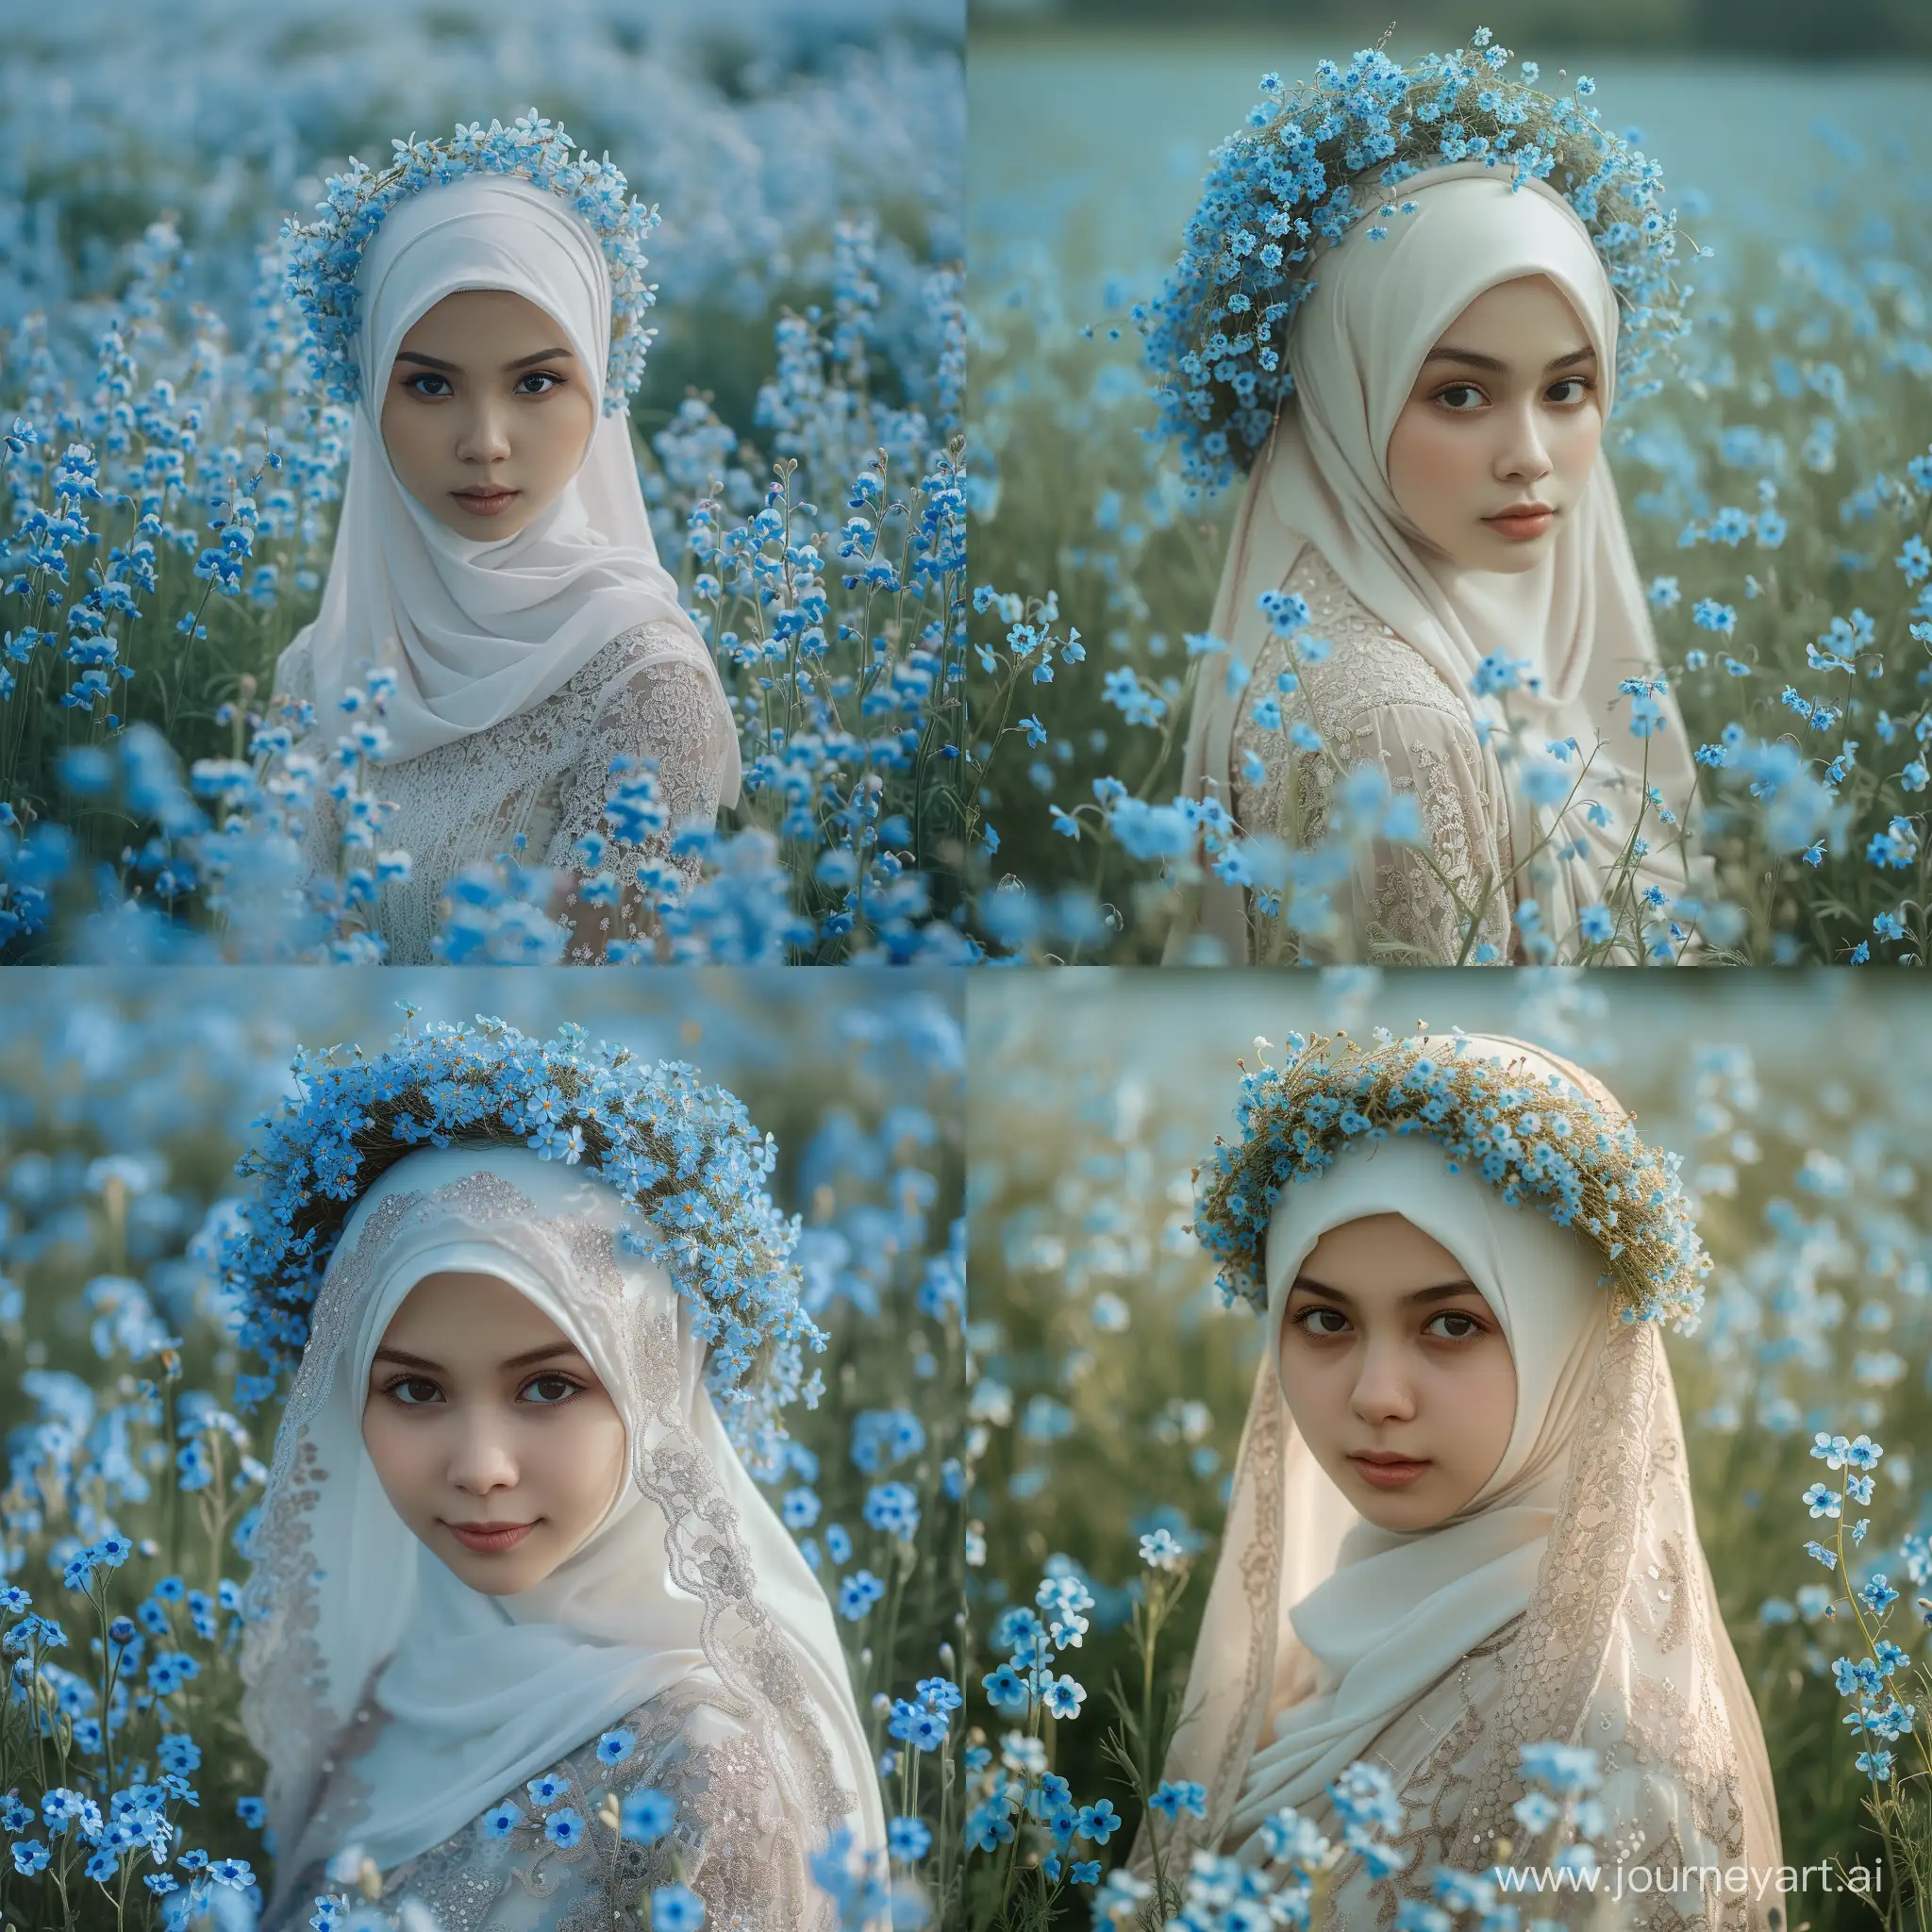 Graceful-Sundanese-Woman-in-White-Hijab-Dress-amidst-ForgetMeNots